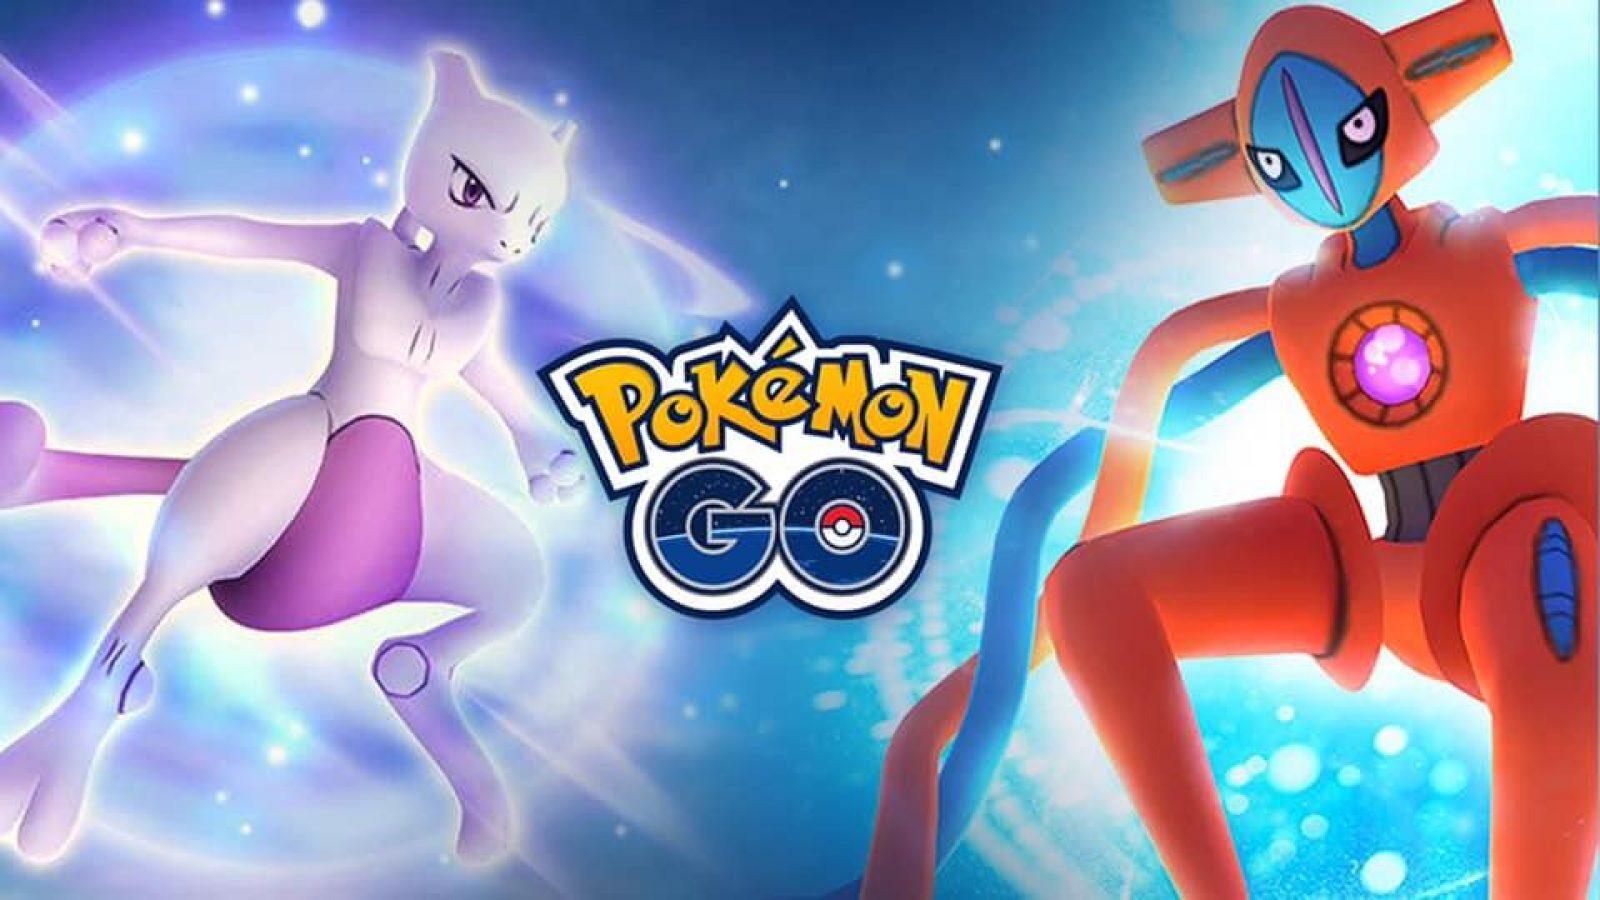 Deoxys (Defense) (Pokémon GO): Stats, Moves, Counters, Evolution